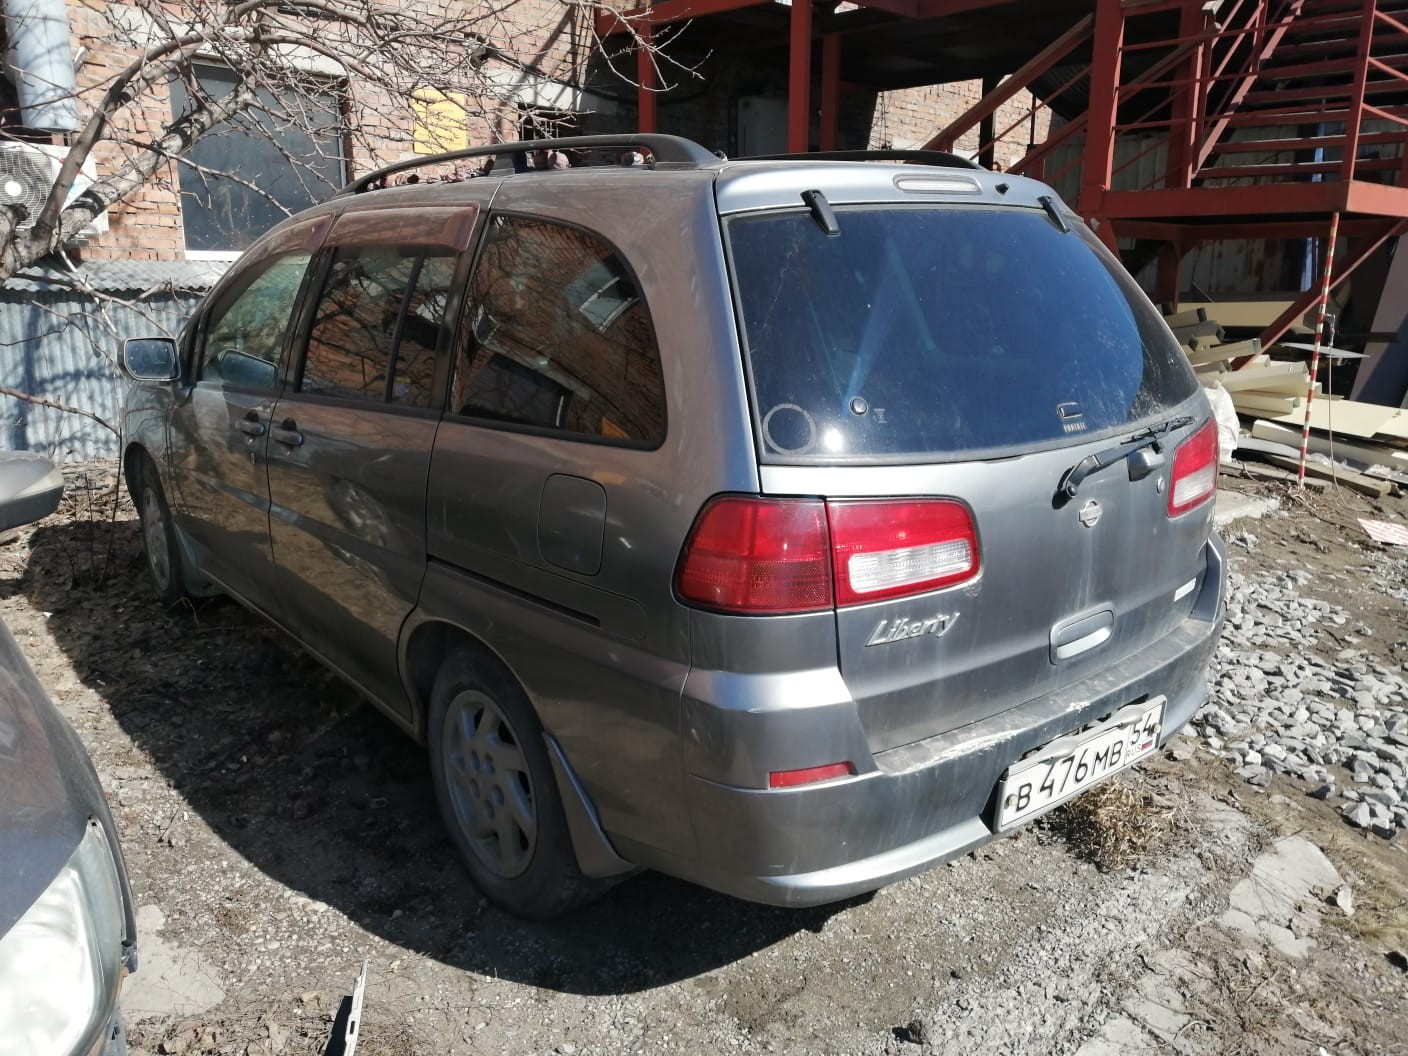 Автомобиль NISSAN LIBERTY, 2000 г.в., г/н В476МВ54, номер кузова: PM12-174868, цвет серый (залог) Те